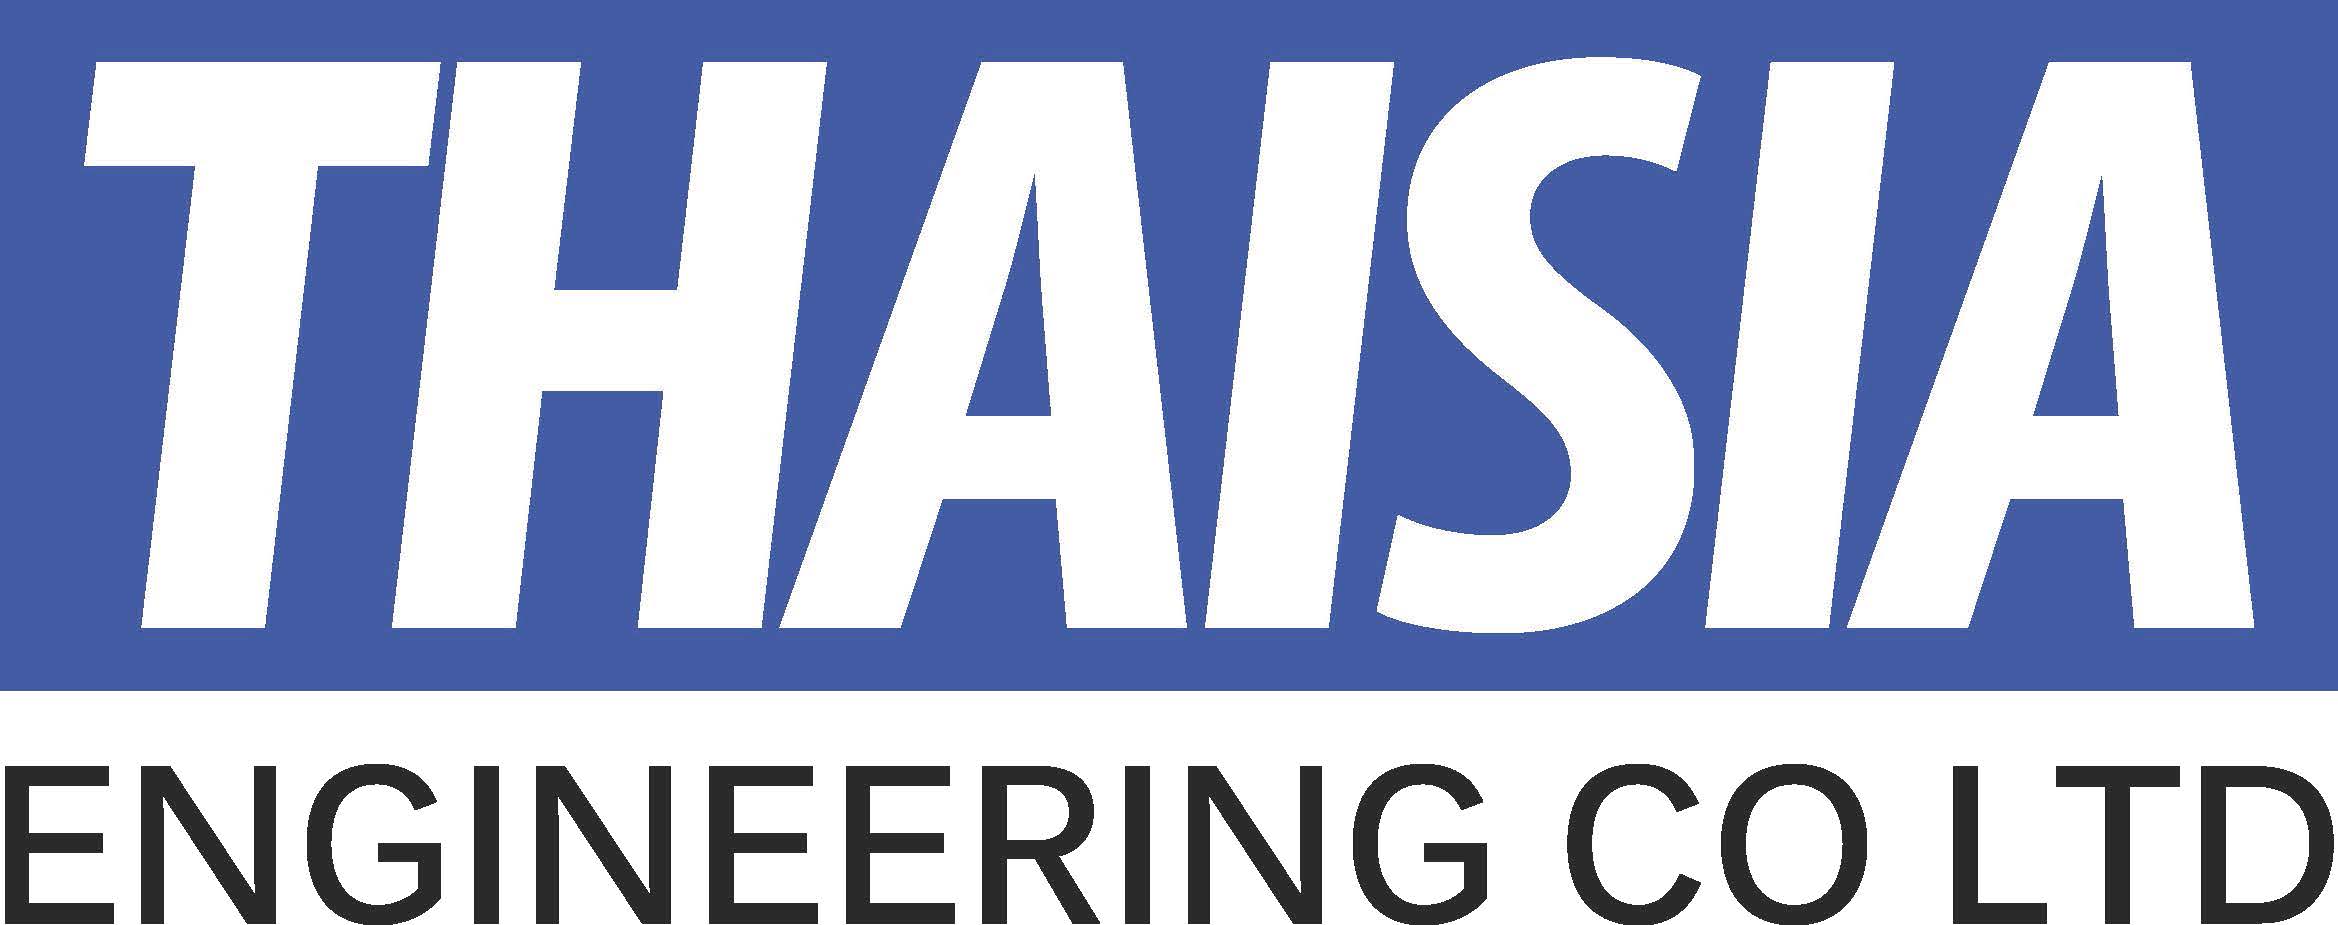 Thaisia Engineering Co.,Ltd.